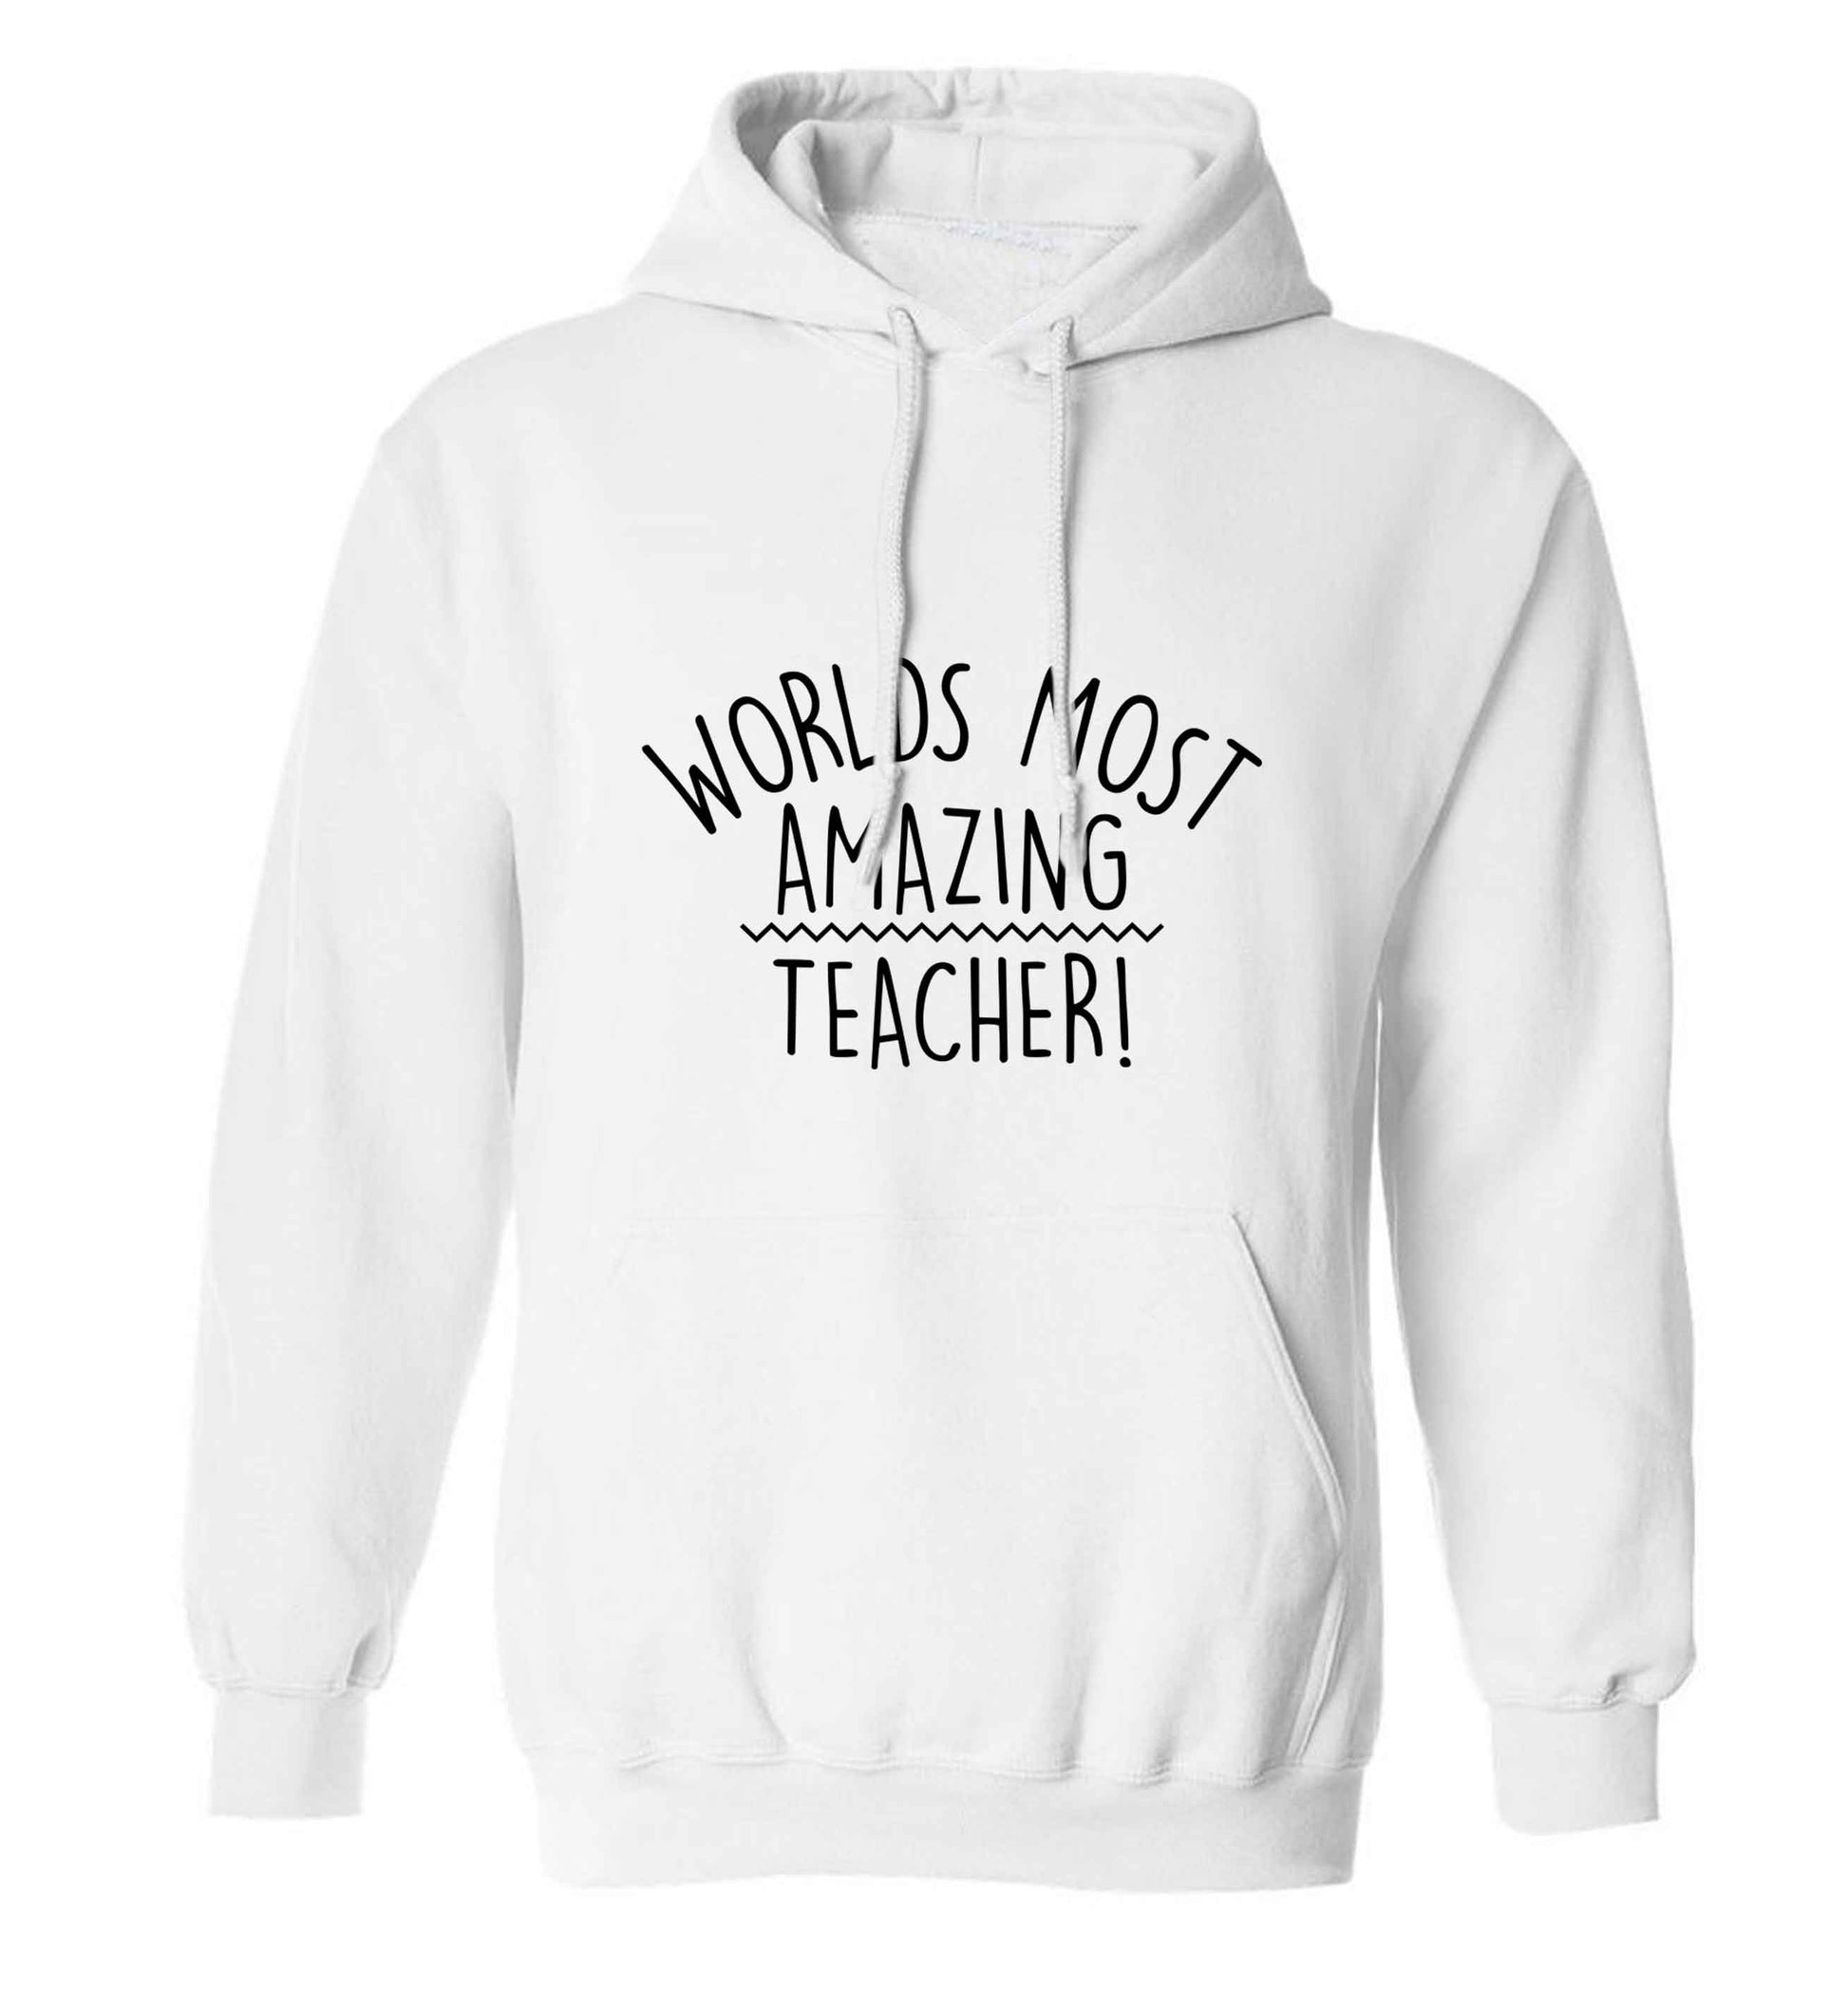 Worlds most amazing teacher adults unisex white hoodie 2XL